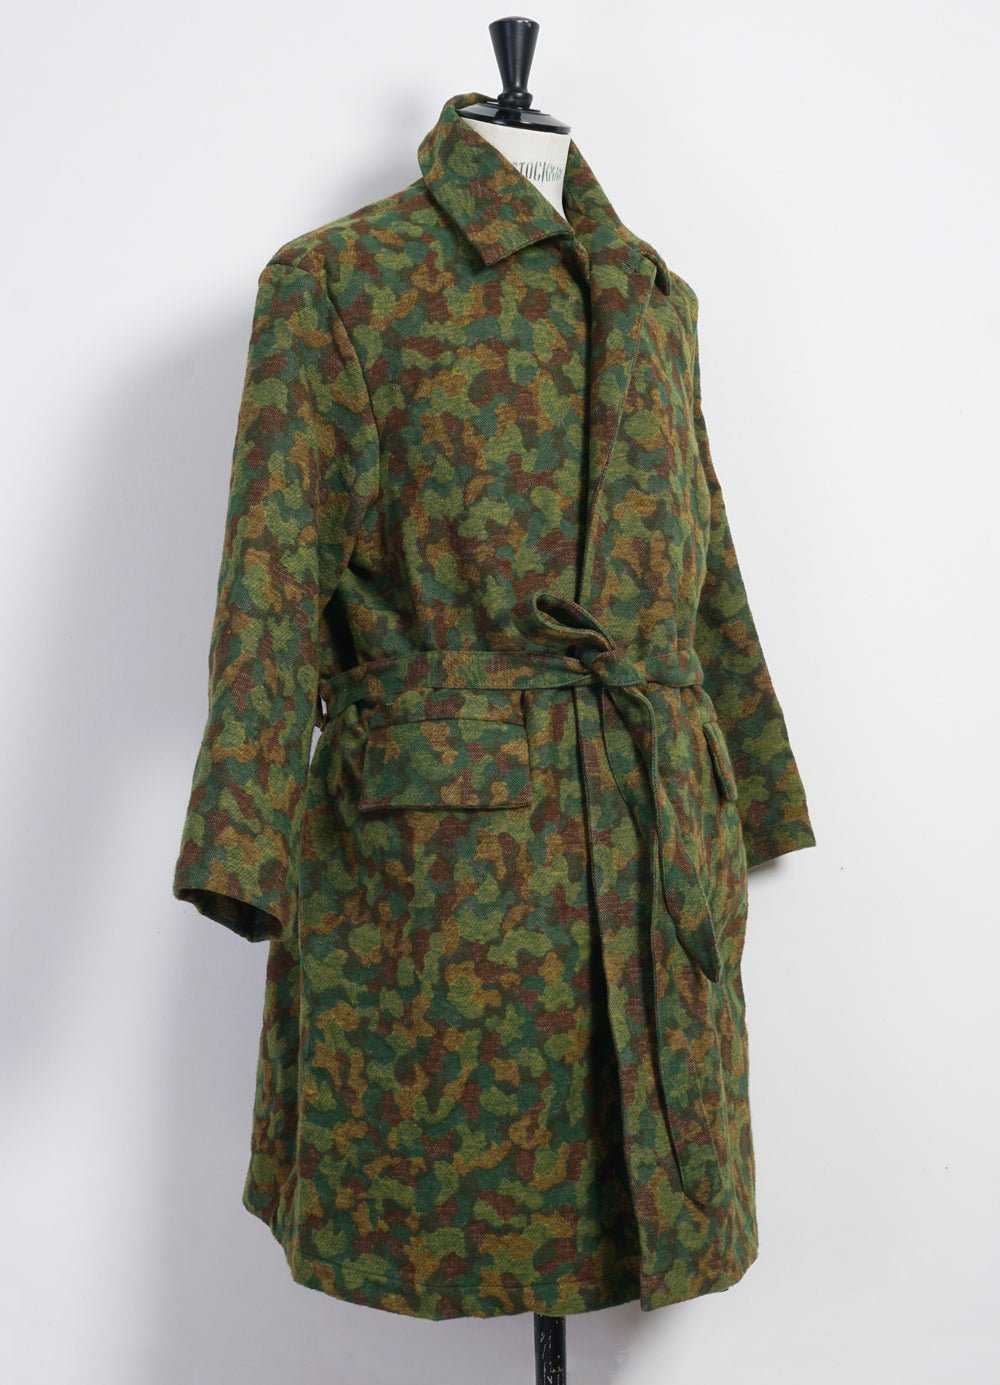 MONITALY - JUTE COAT | Oversized Coat With Belt | Green Jacquard Camo - HANSEN Garments